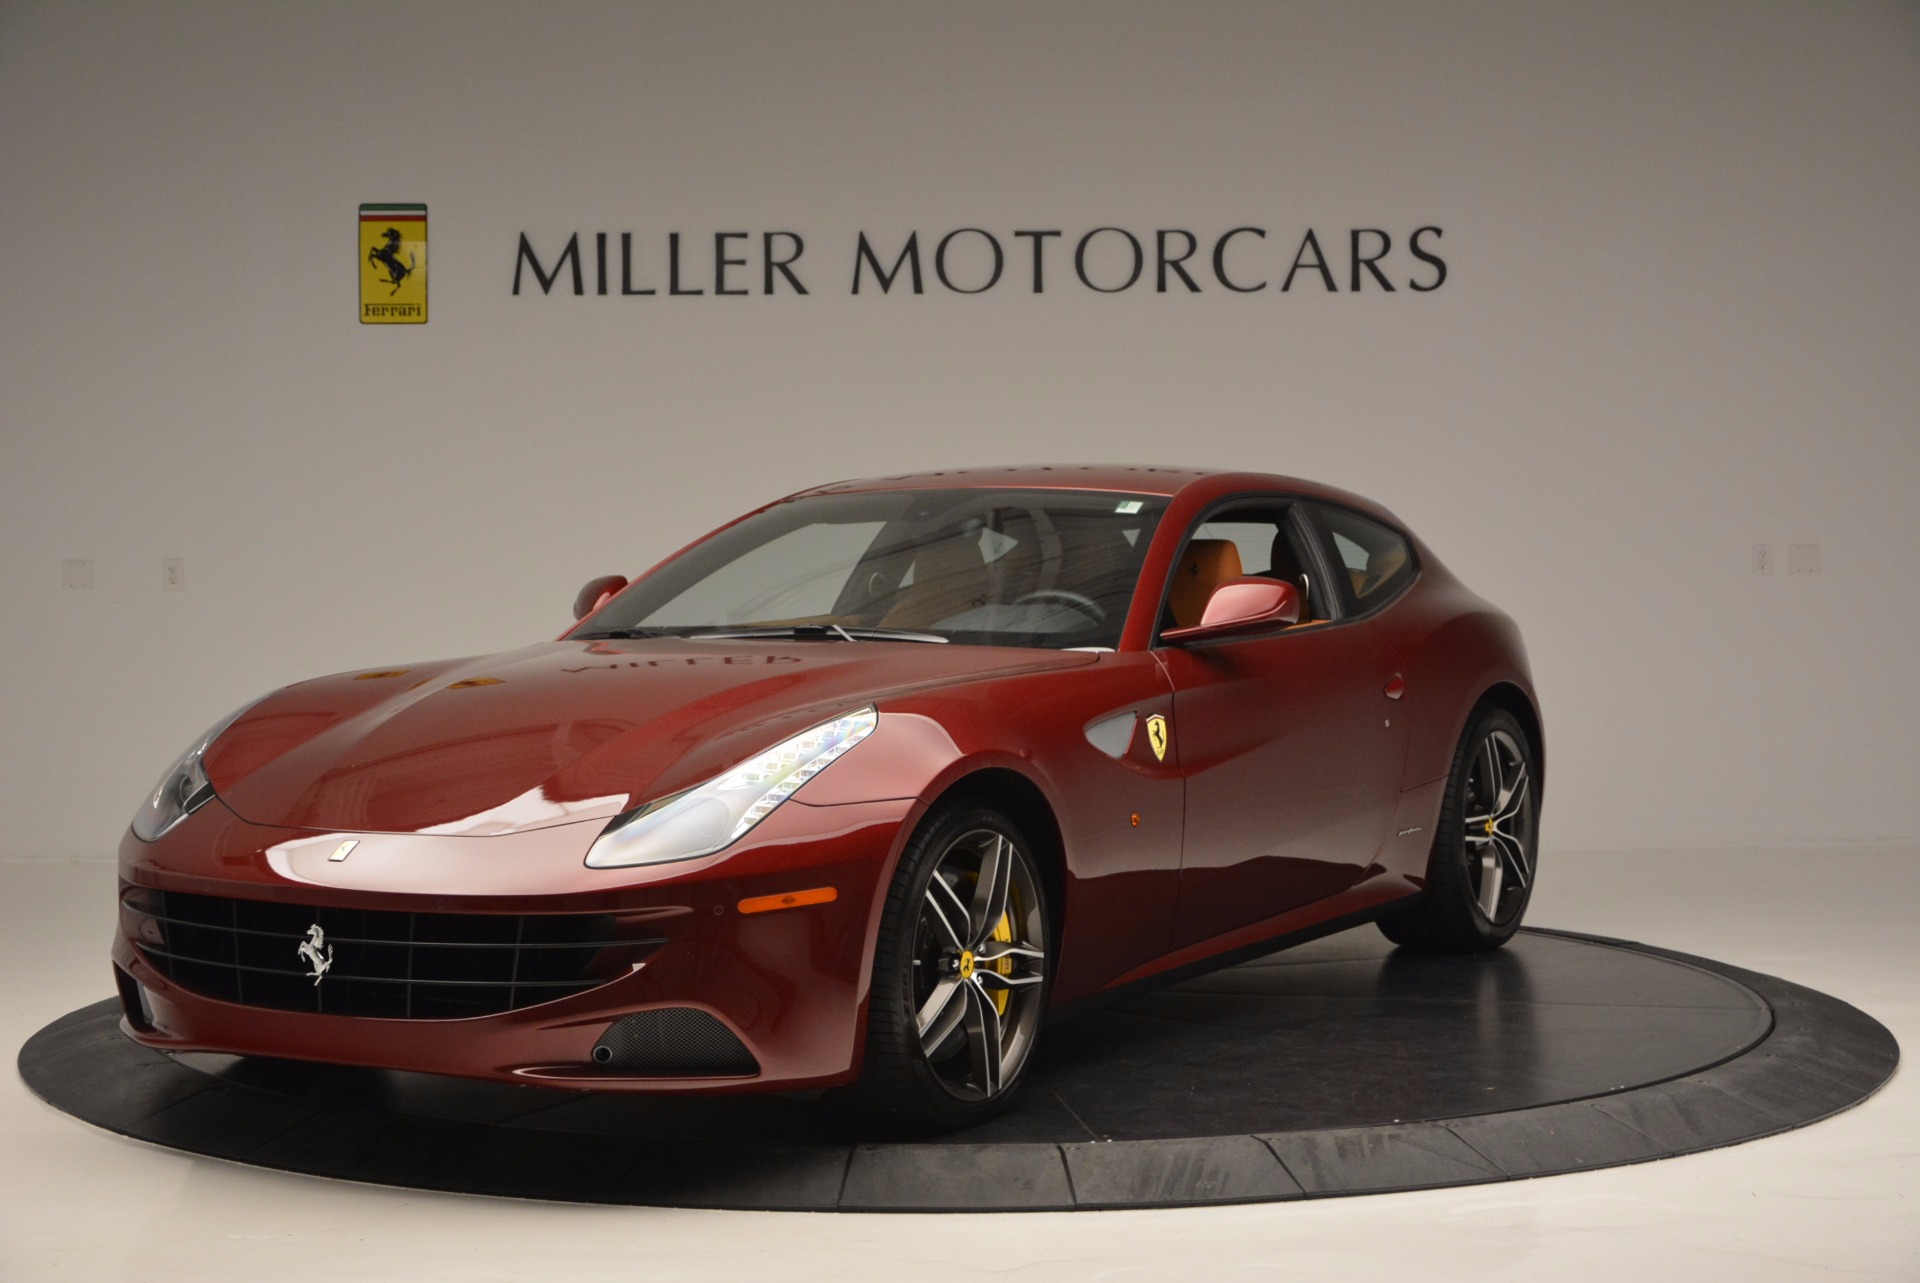 Pre-Owned 2015 Ferrari FF For Sale | Ferrari of Greenwich Stock #4352